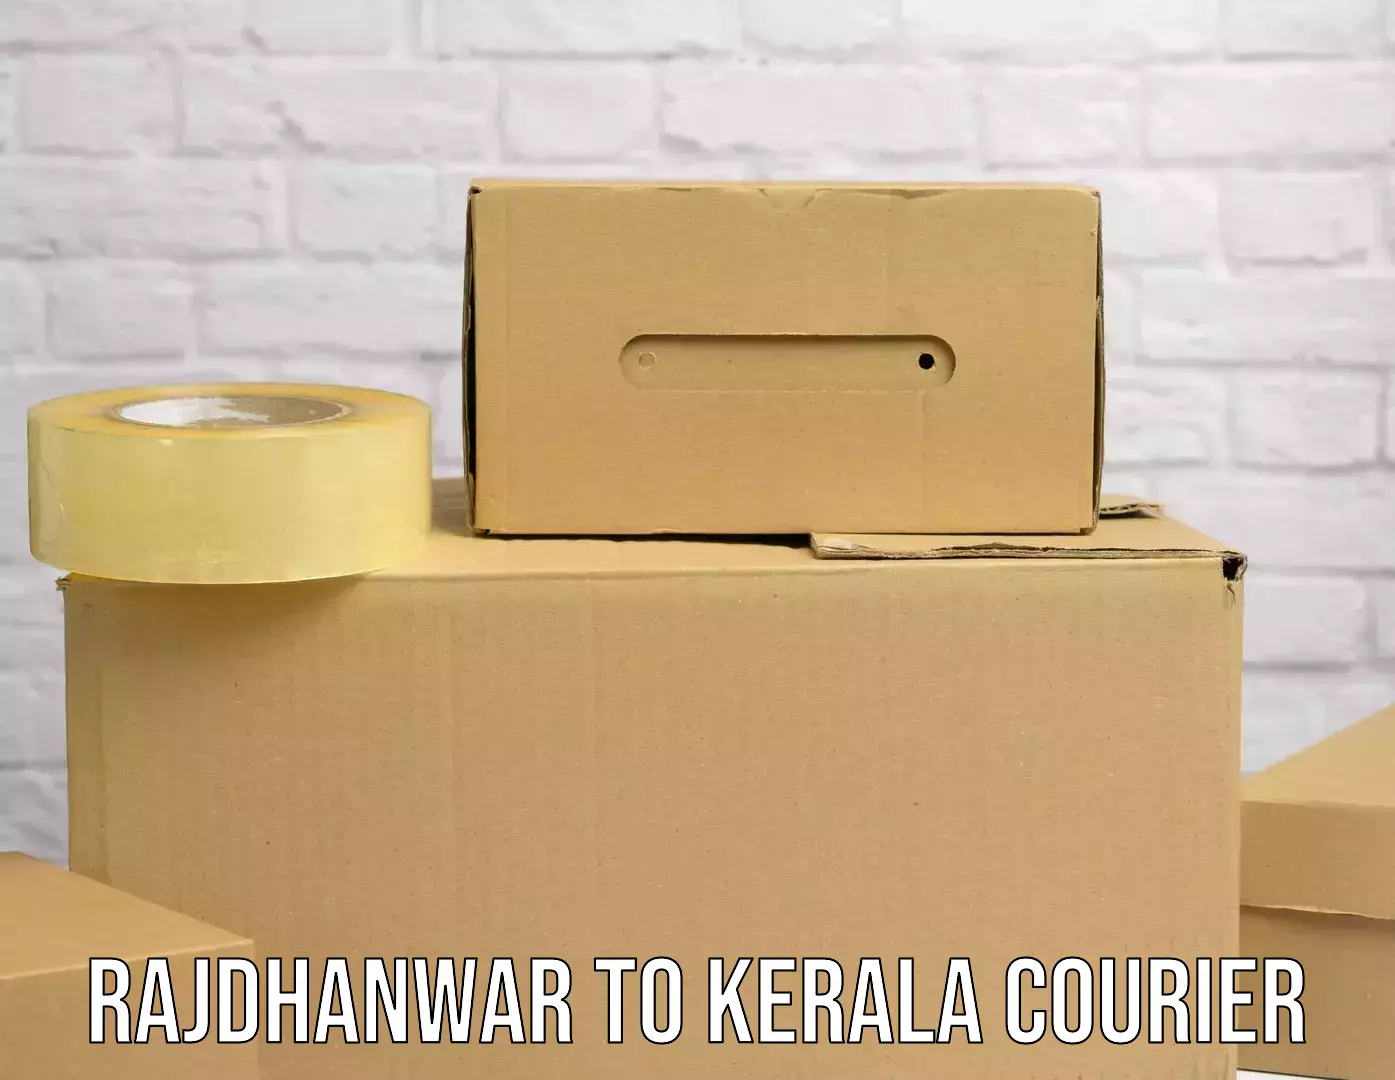 Courier service innovation Rajdhanwar to Kottayam